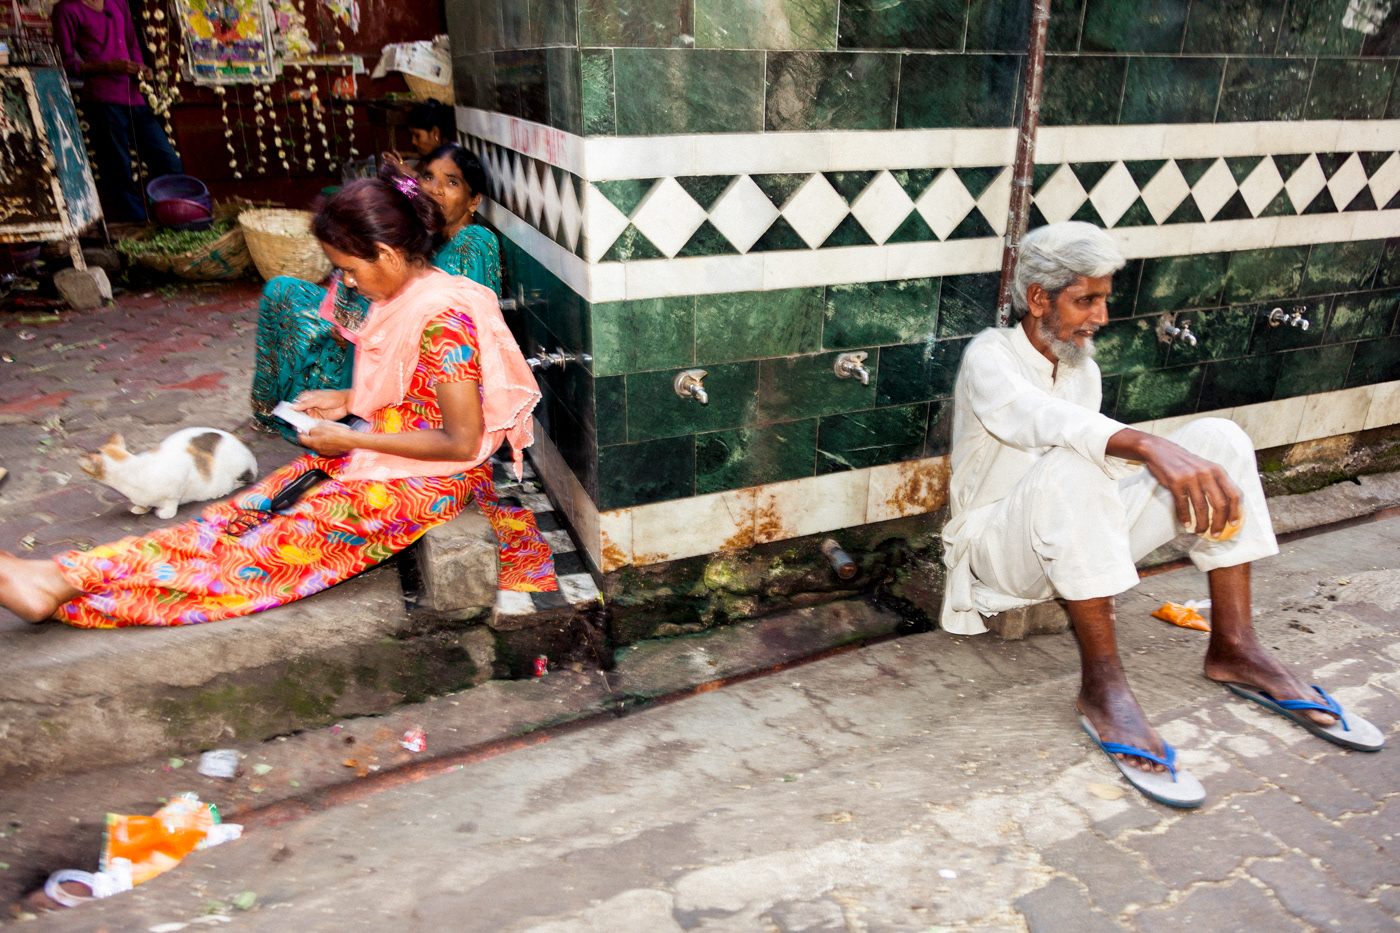 India MUMBAI homeless streets dwellers Poverty dirt fort MORNING sleeping rough beggars poor mahapalika marg